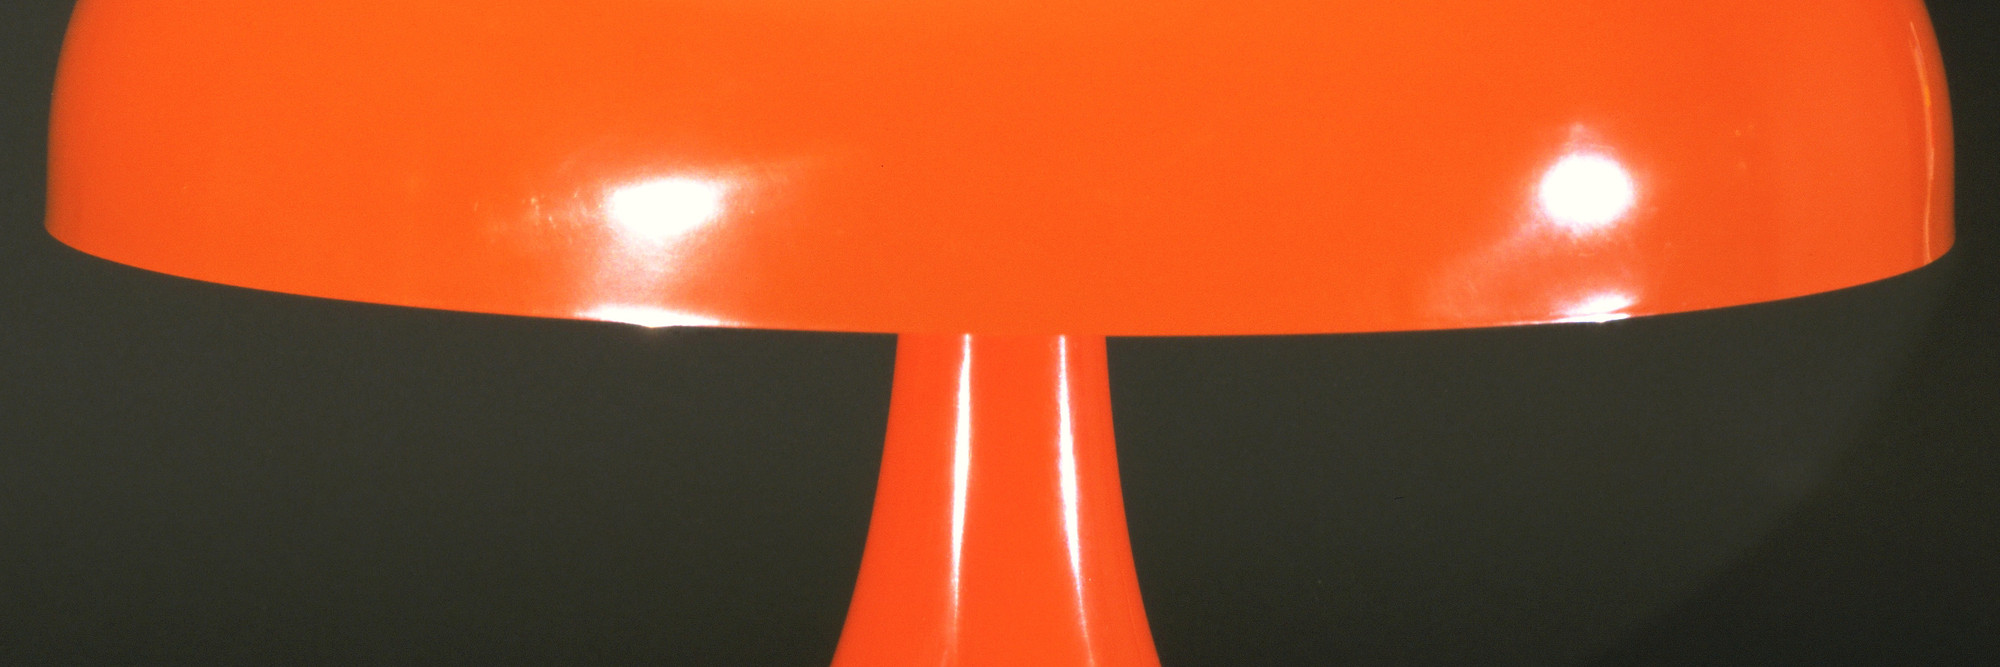 Giancarlo Mattioli, of Gruppo Architetti Urbanisti Città Nuova. Nesso Table Lamp. 1965. Manufacturer: Artemide S.p.A., Milan, Italy. Fiberglass-reinforced polyester resin, 13 × 21″ (33 × 53.3 cm). Gift of the manufacturer. Photo: Mali Olatunji